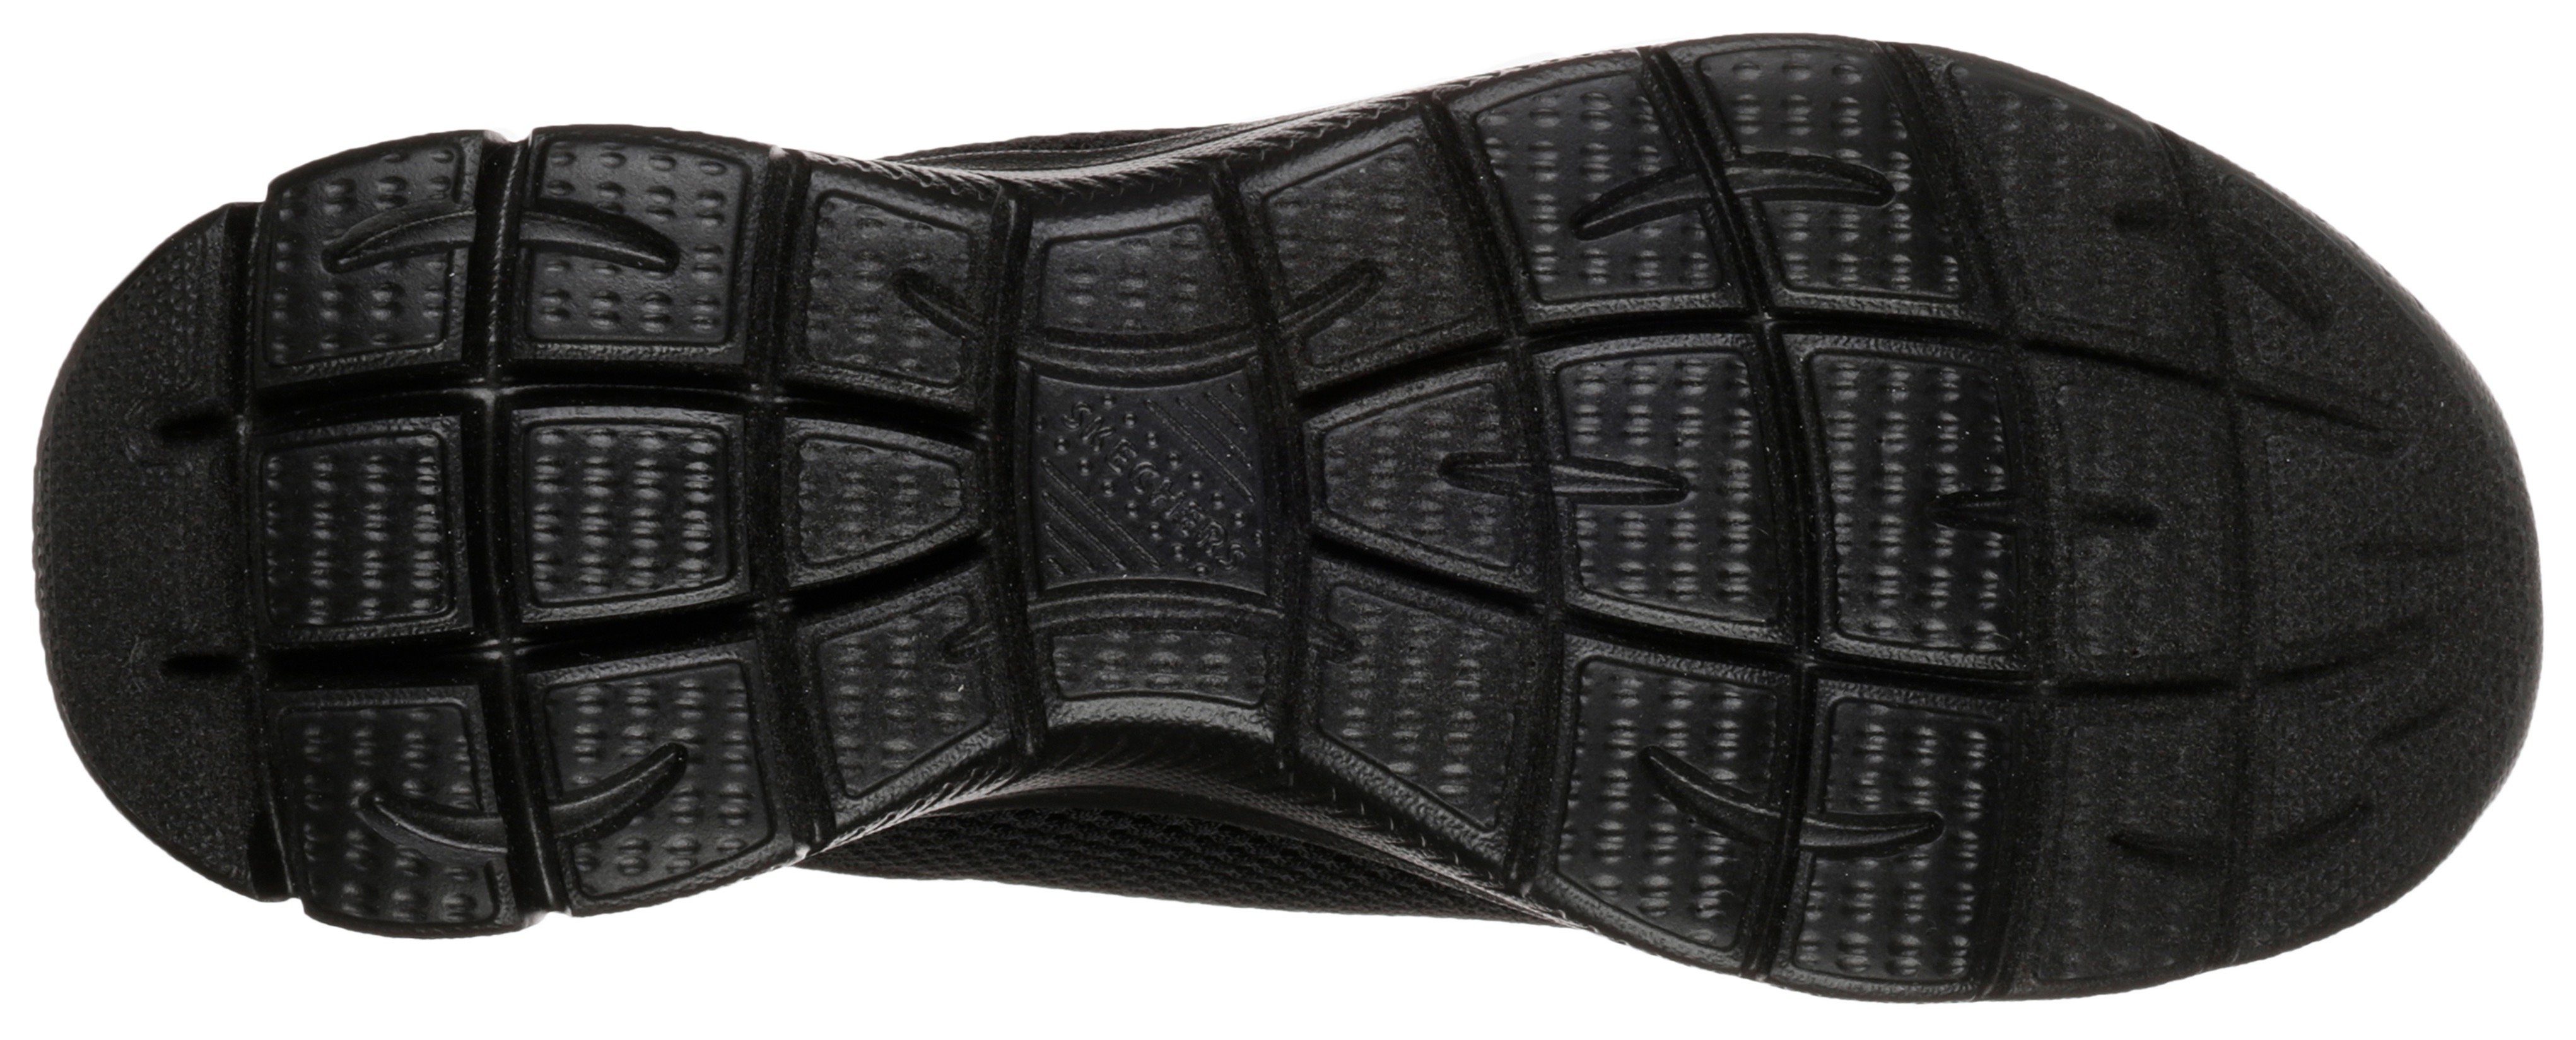 Skechers SUMMITS schwarz Innensohle komfortabler Sneaker mit Slip-On